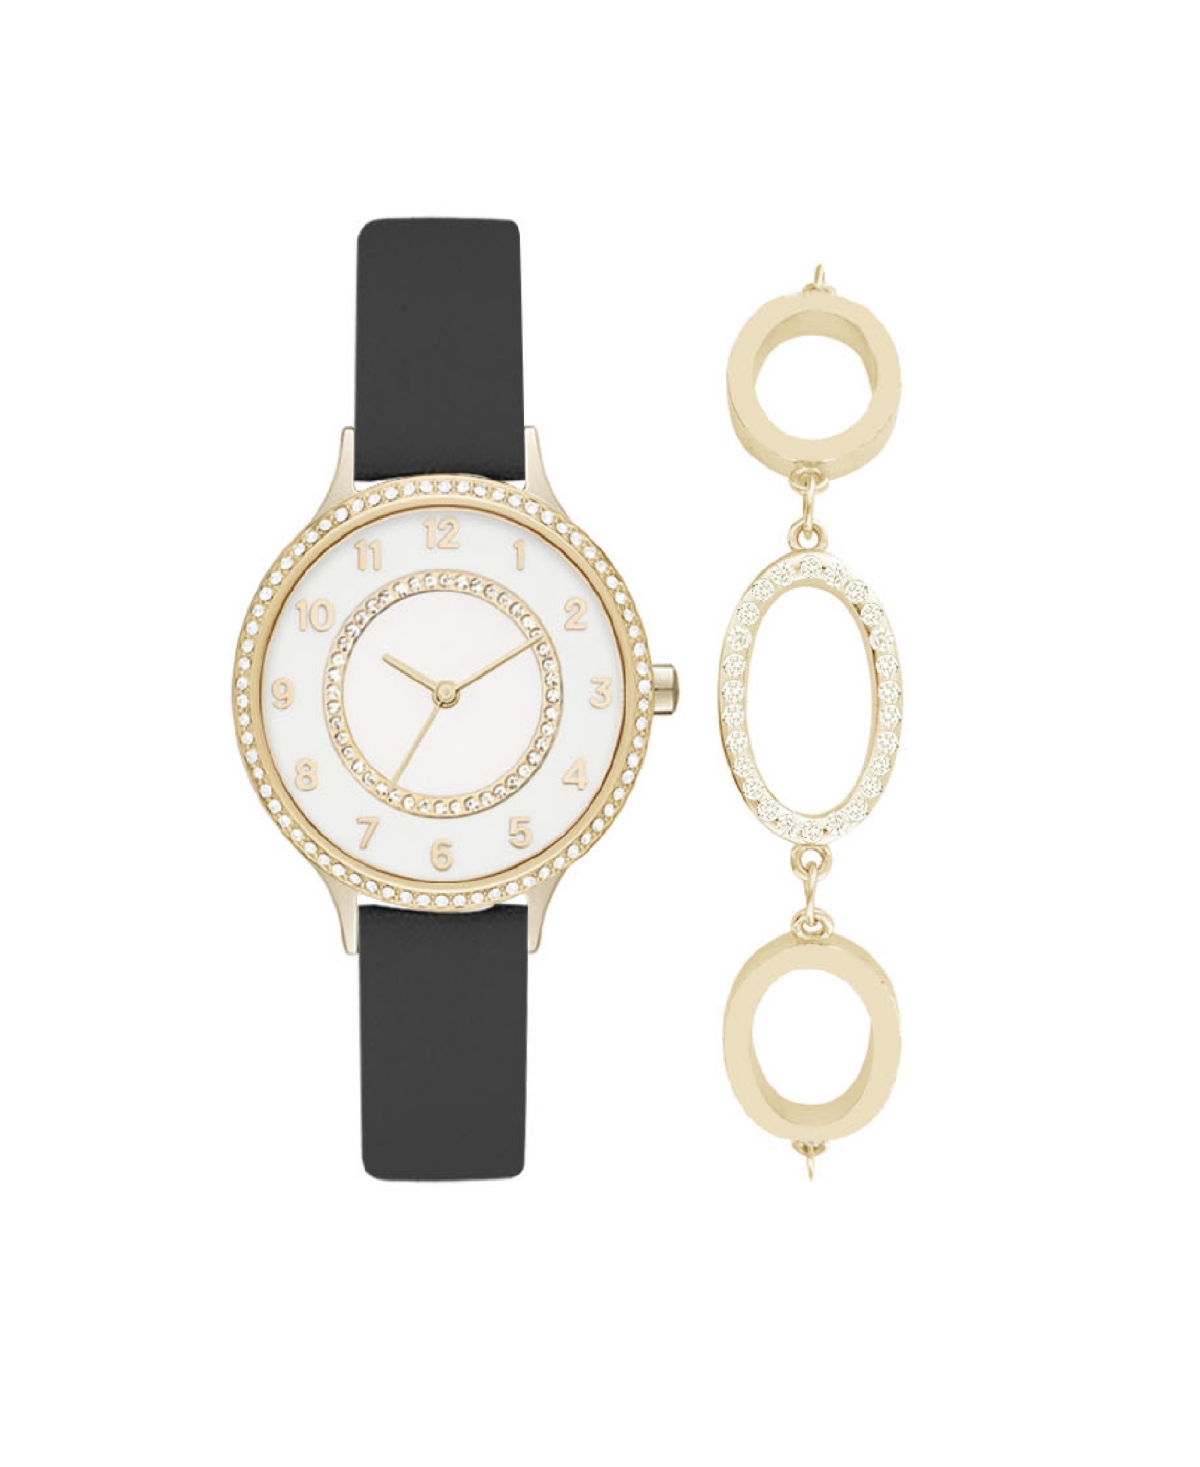 Women's Analog Black Strap Watch 34mm with Gold-Toned Cubic Zirconia Crystal Bracelet Gift Set - Black